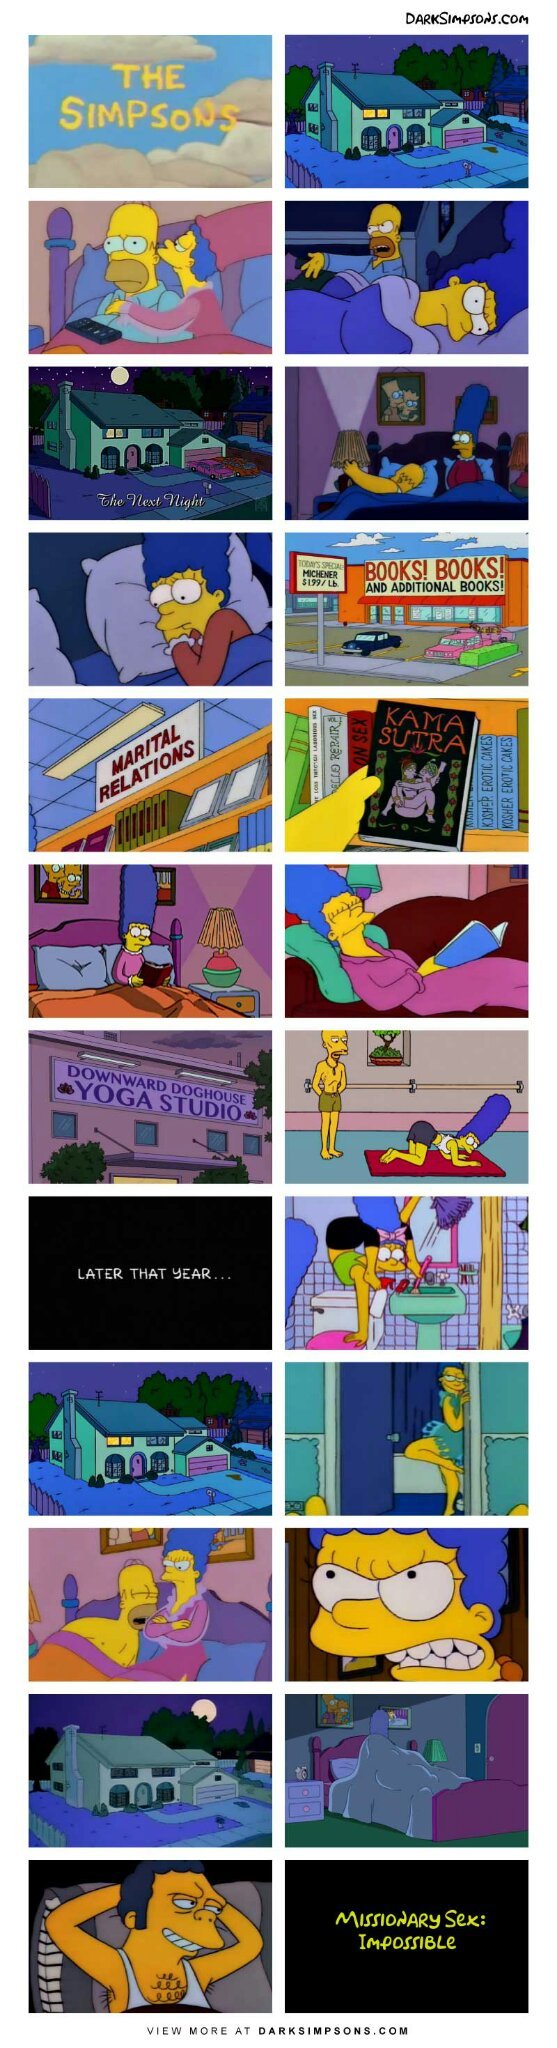 Marge va a yoga - meme